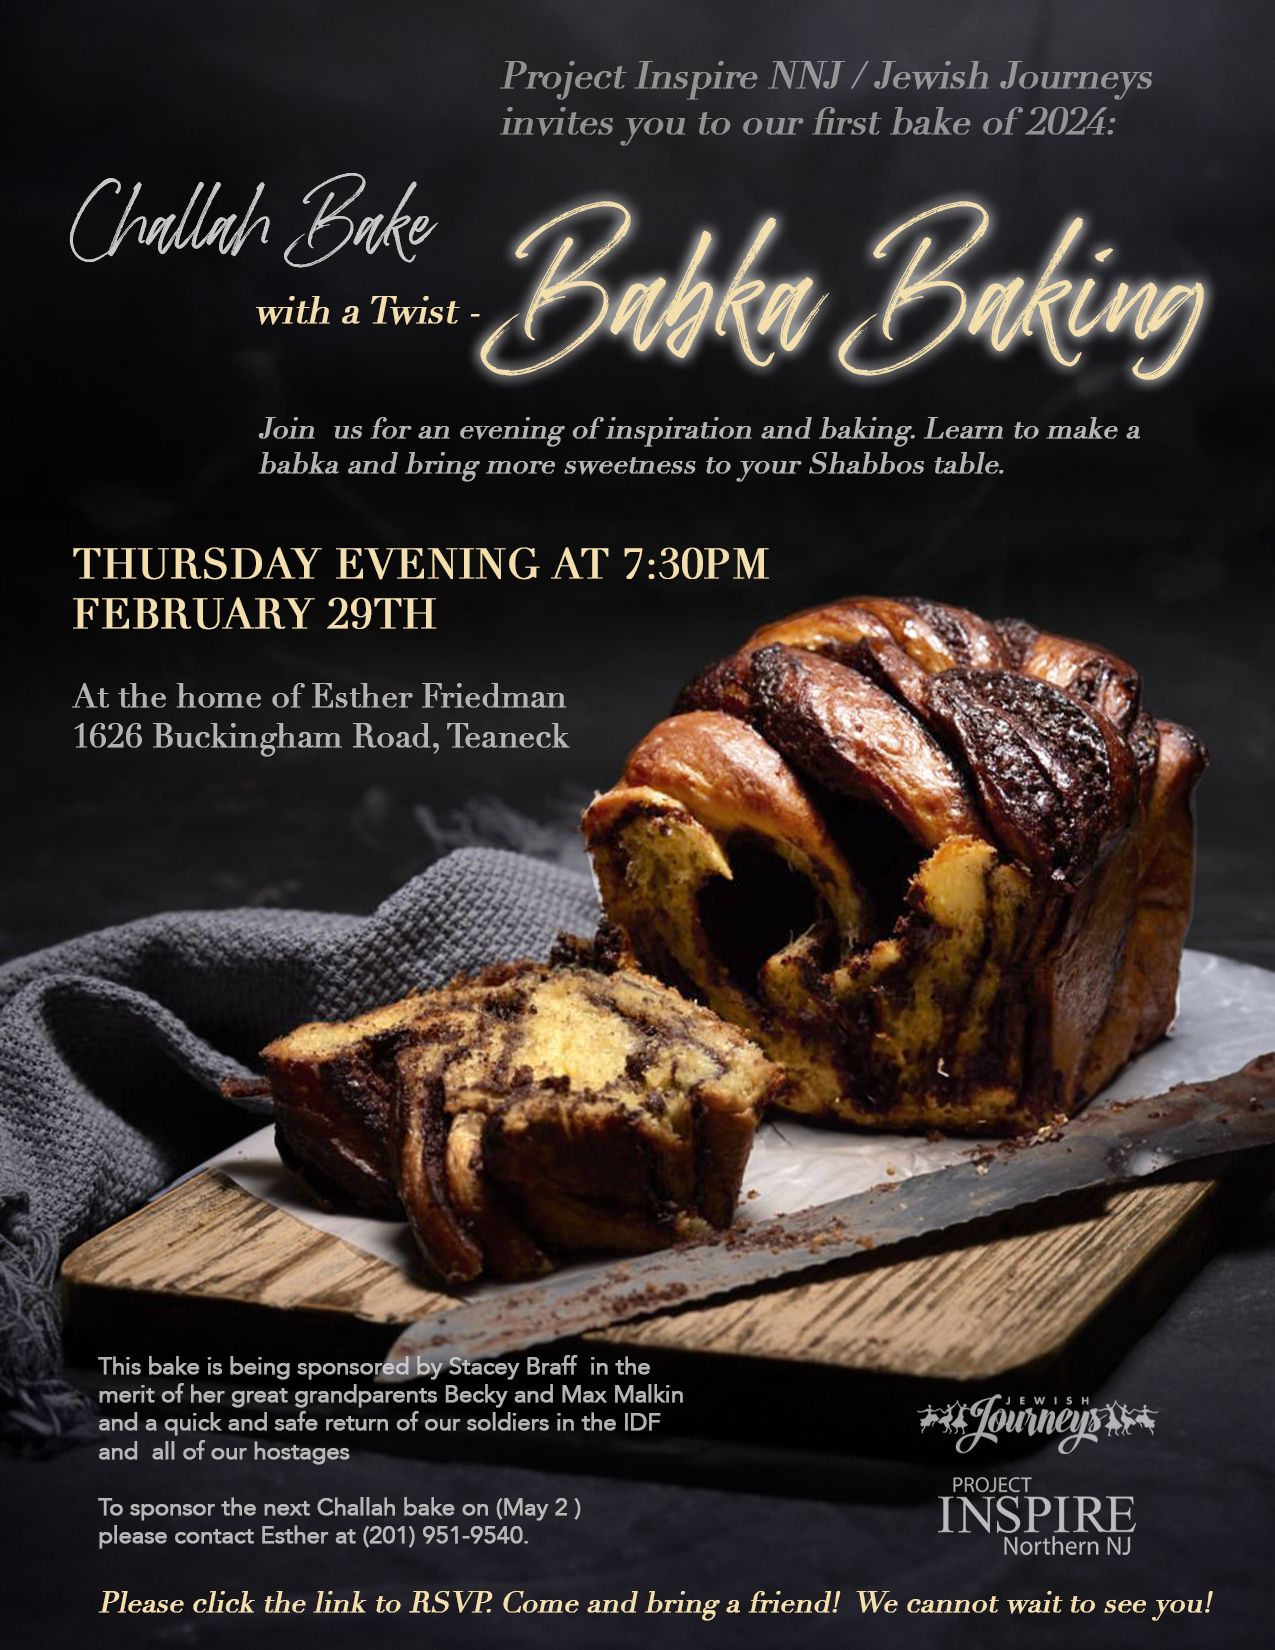 Babka Baking - Challah Baking with a Twist